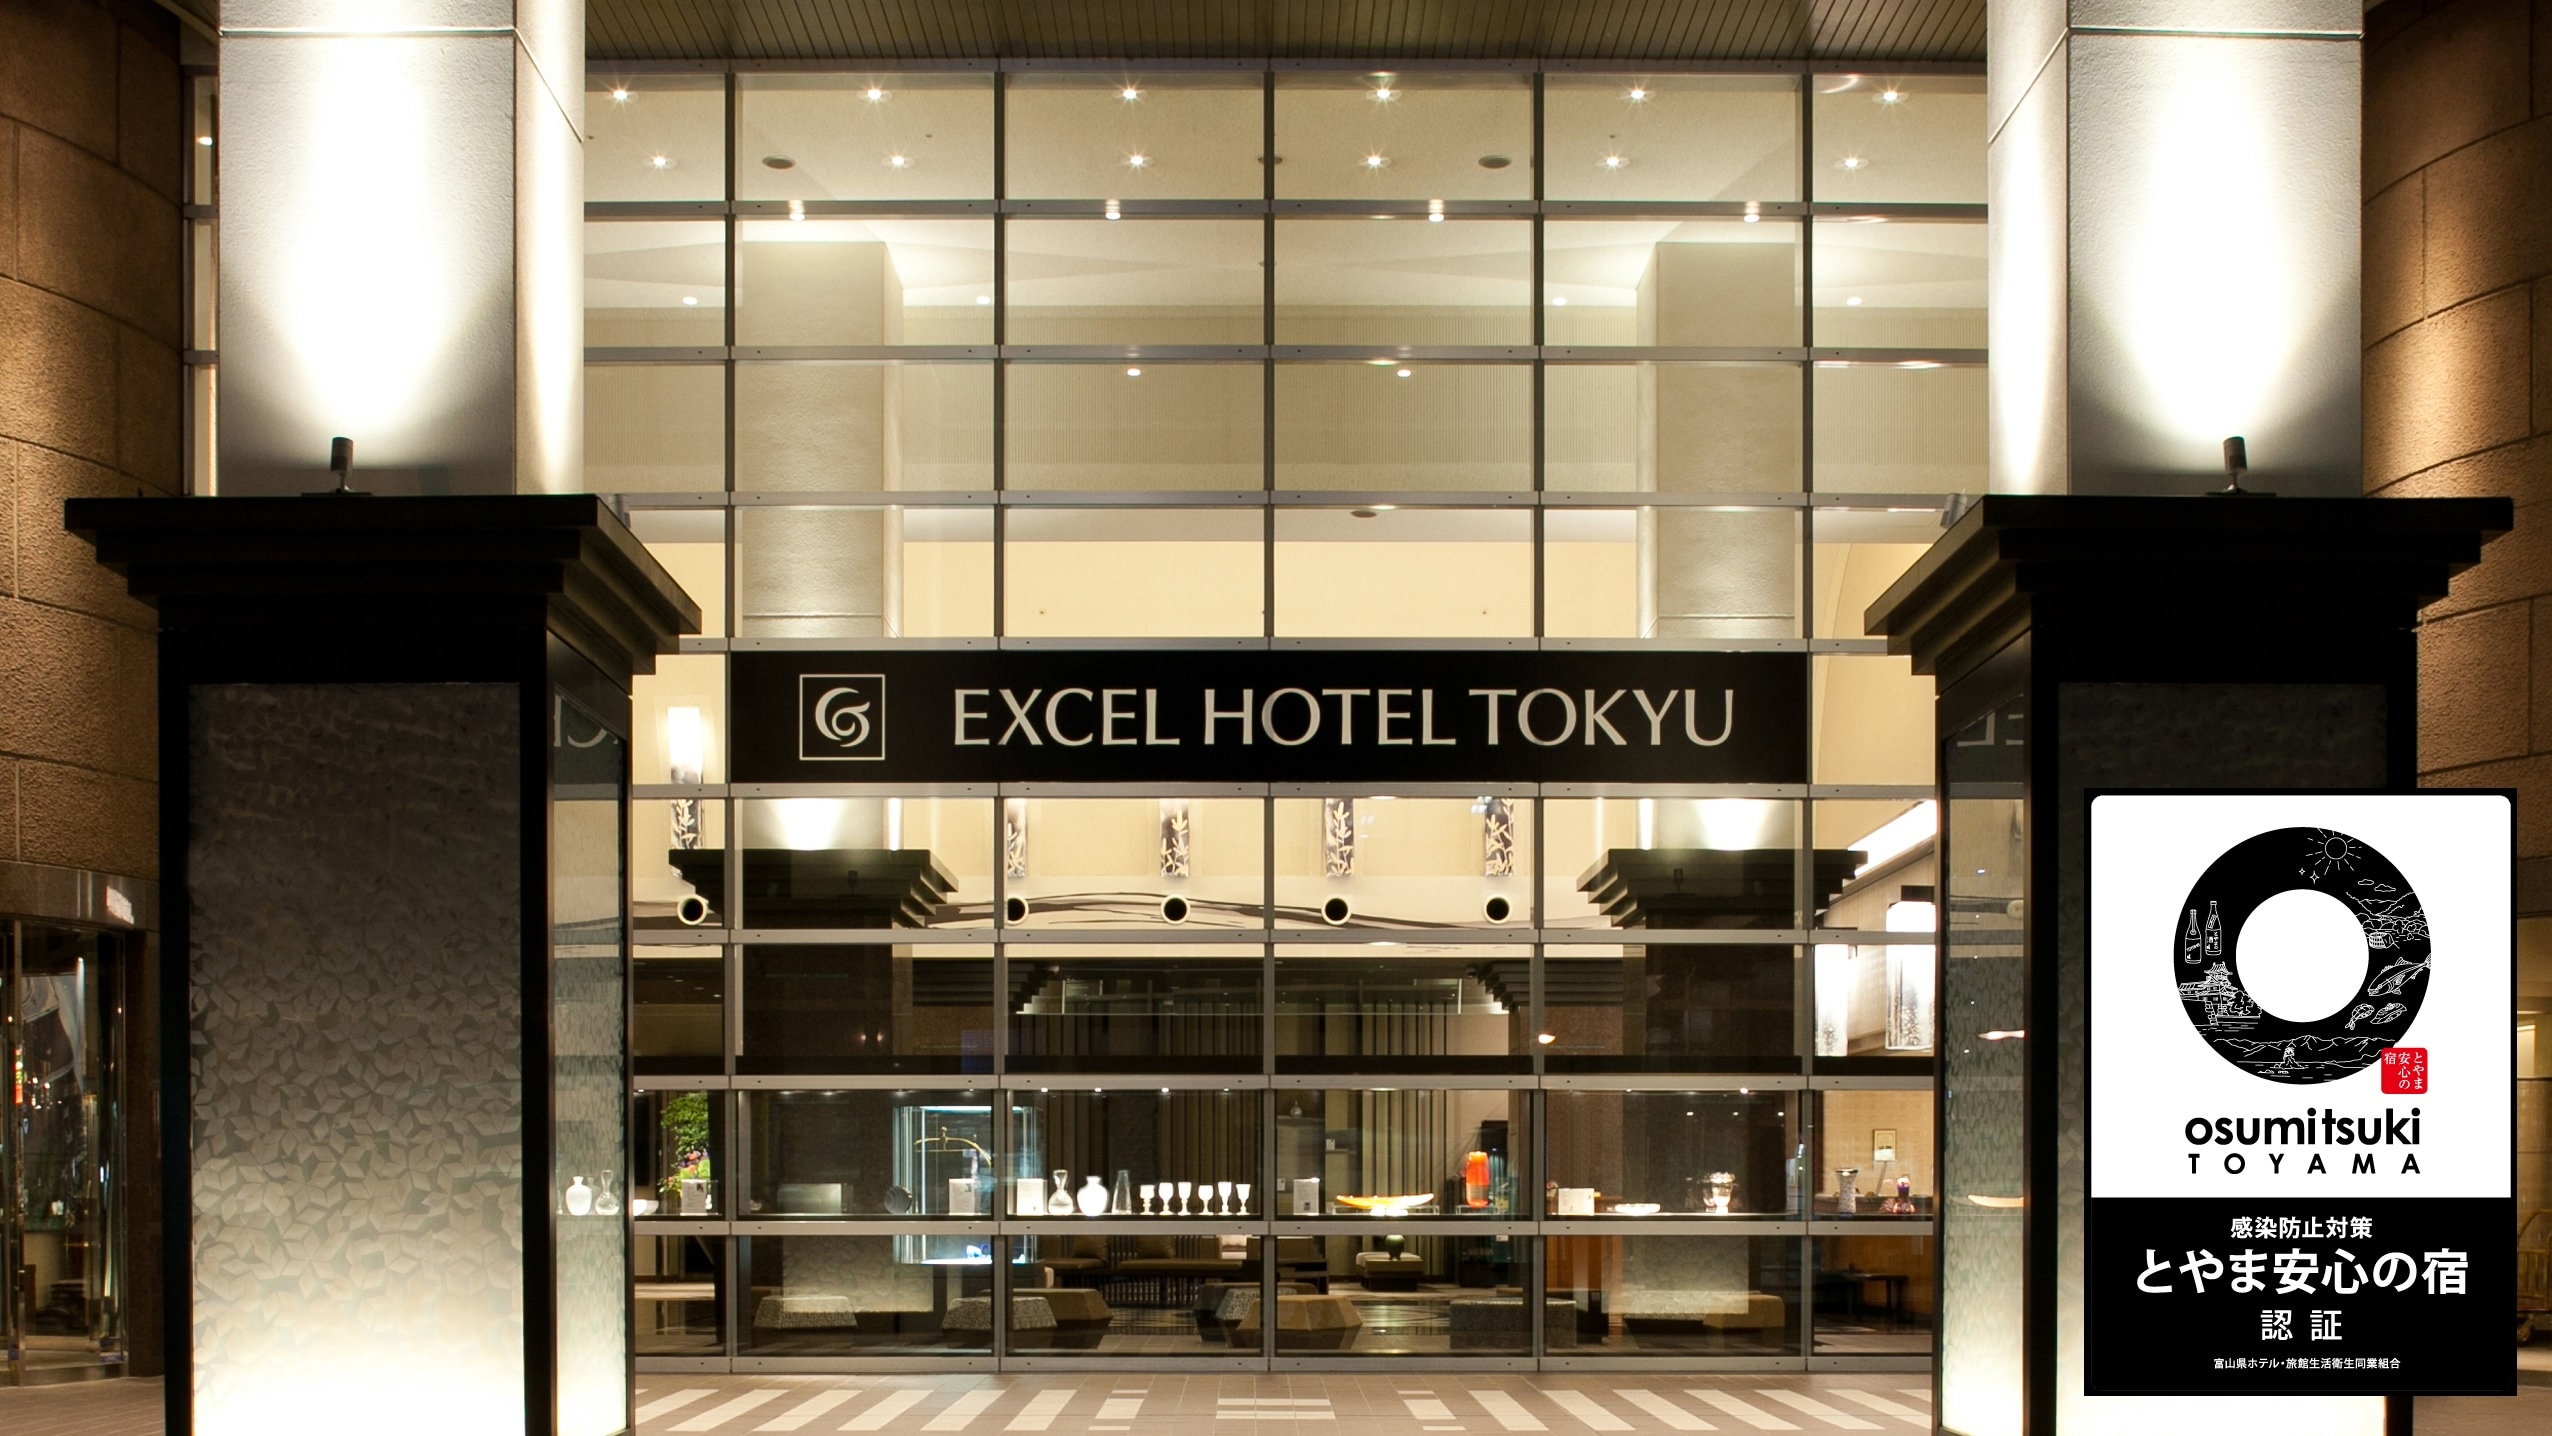 Penampilan hotel Sertifikasi penginapan aman Toyama